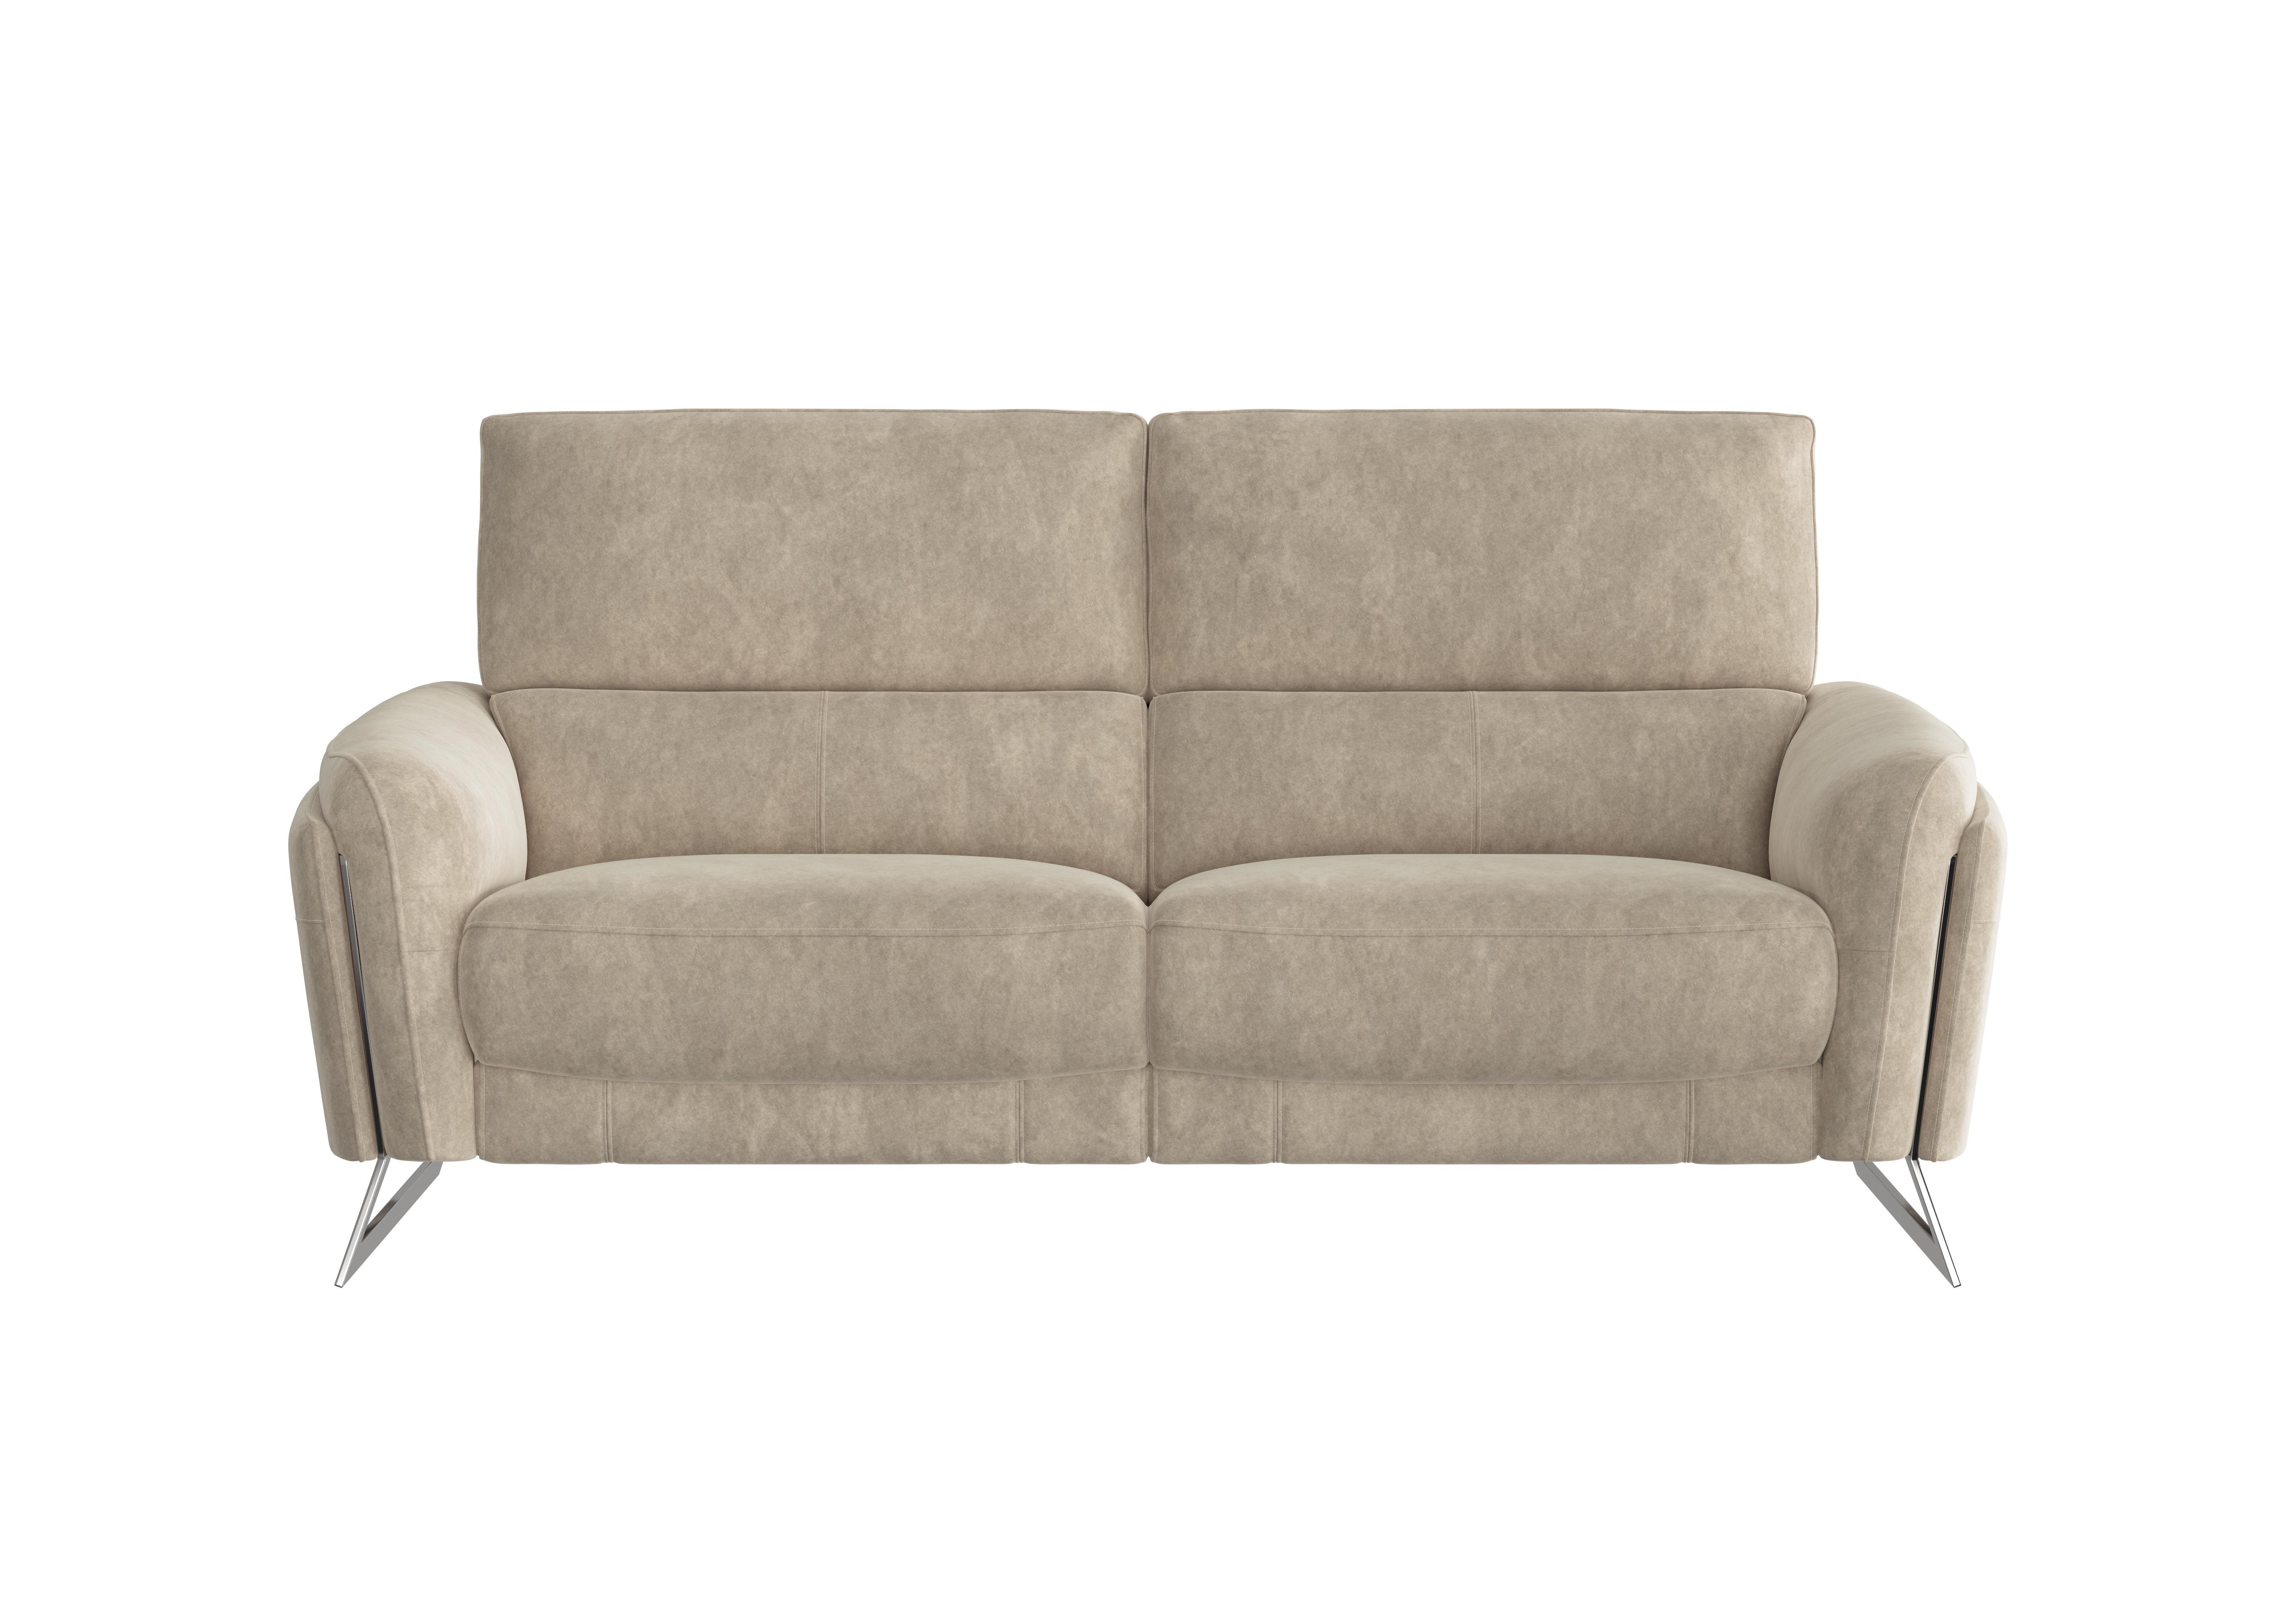 Amarilla 3 Seater Fabric Sofa in Bfa-Bnn-R26 Cream on Furniture Village